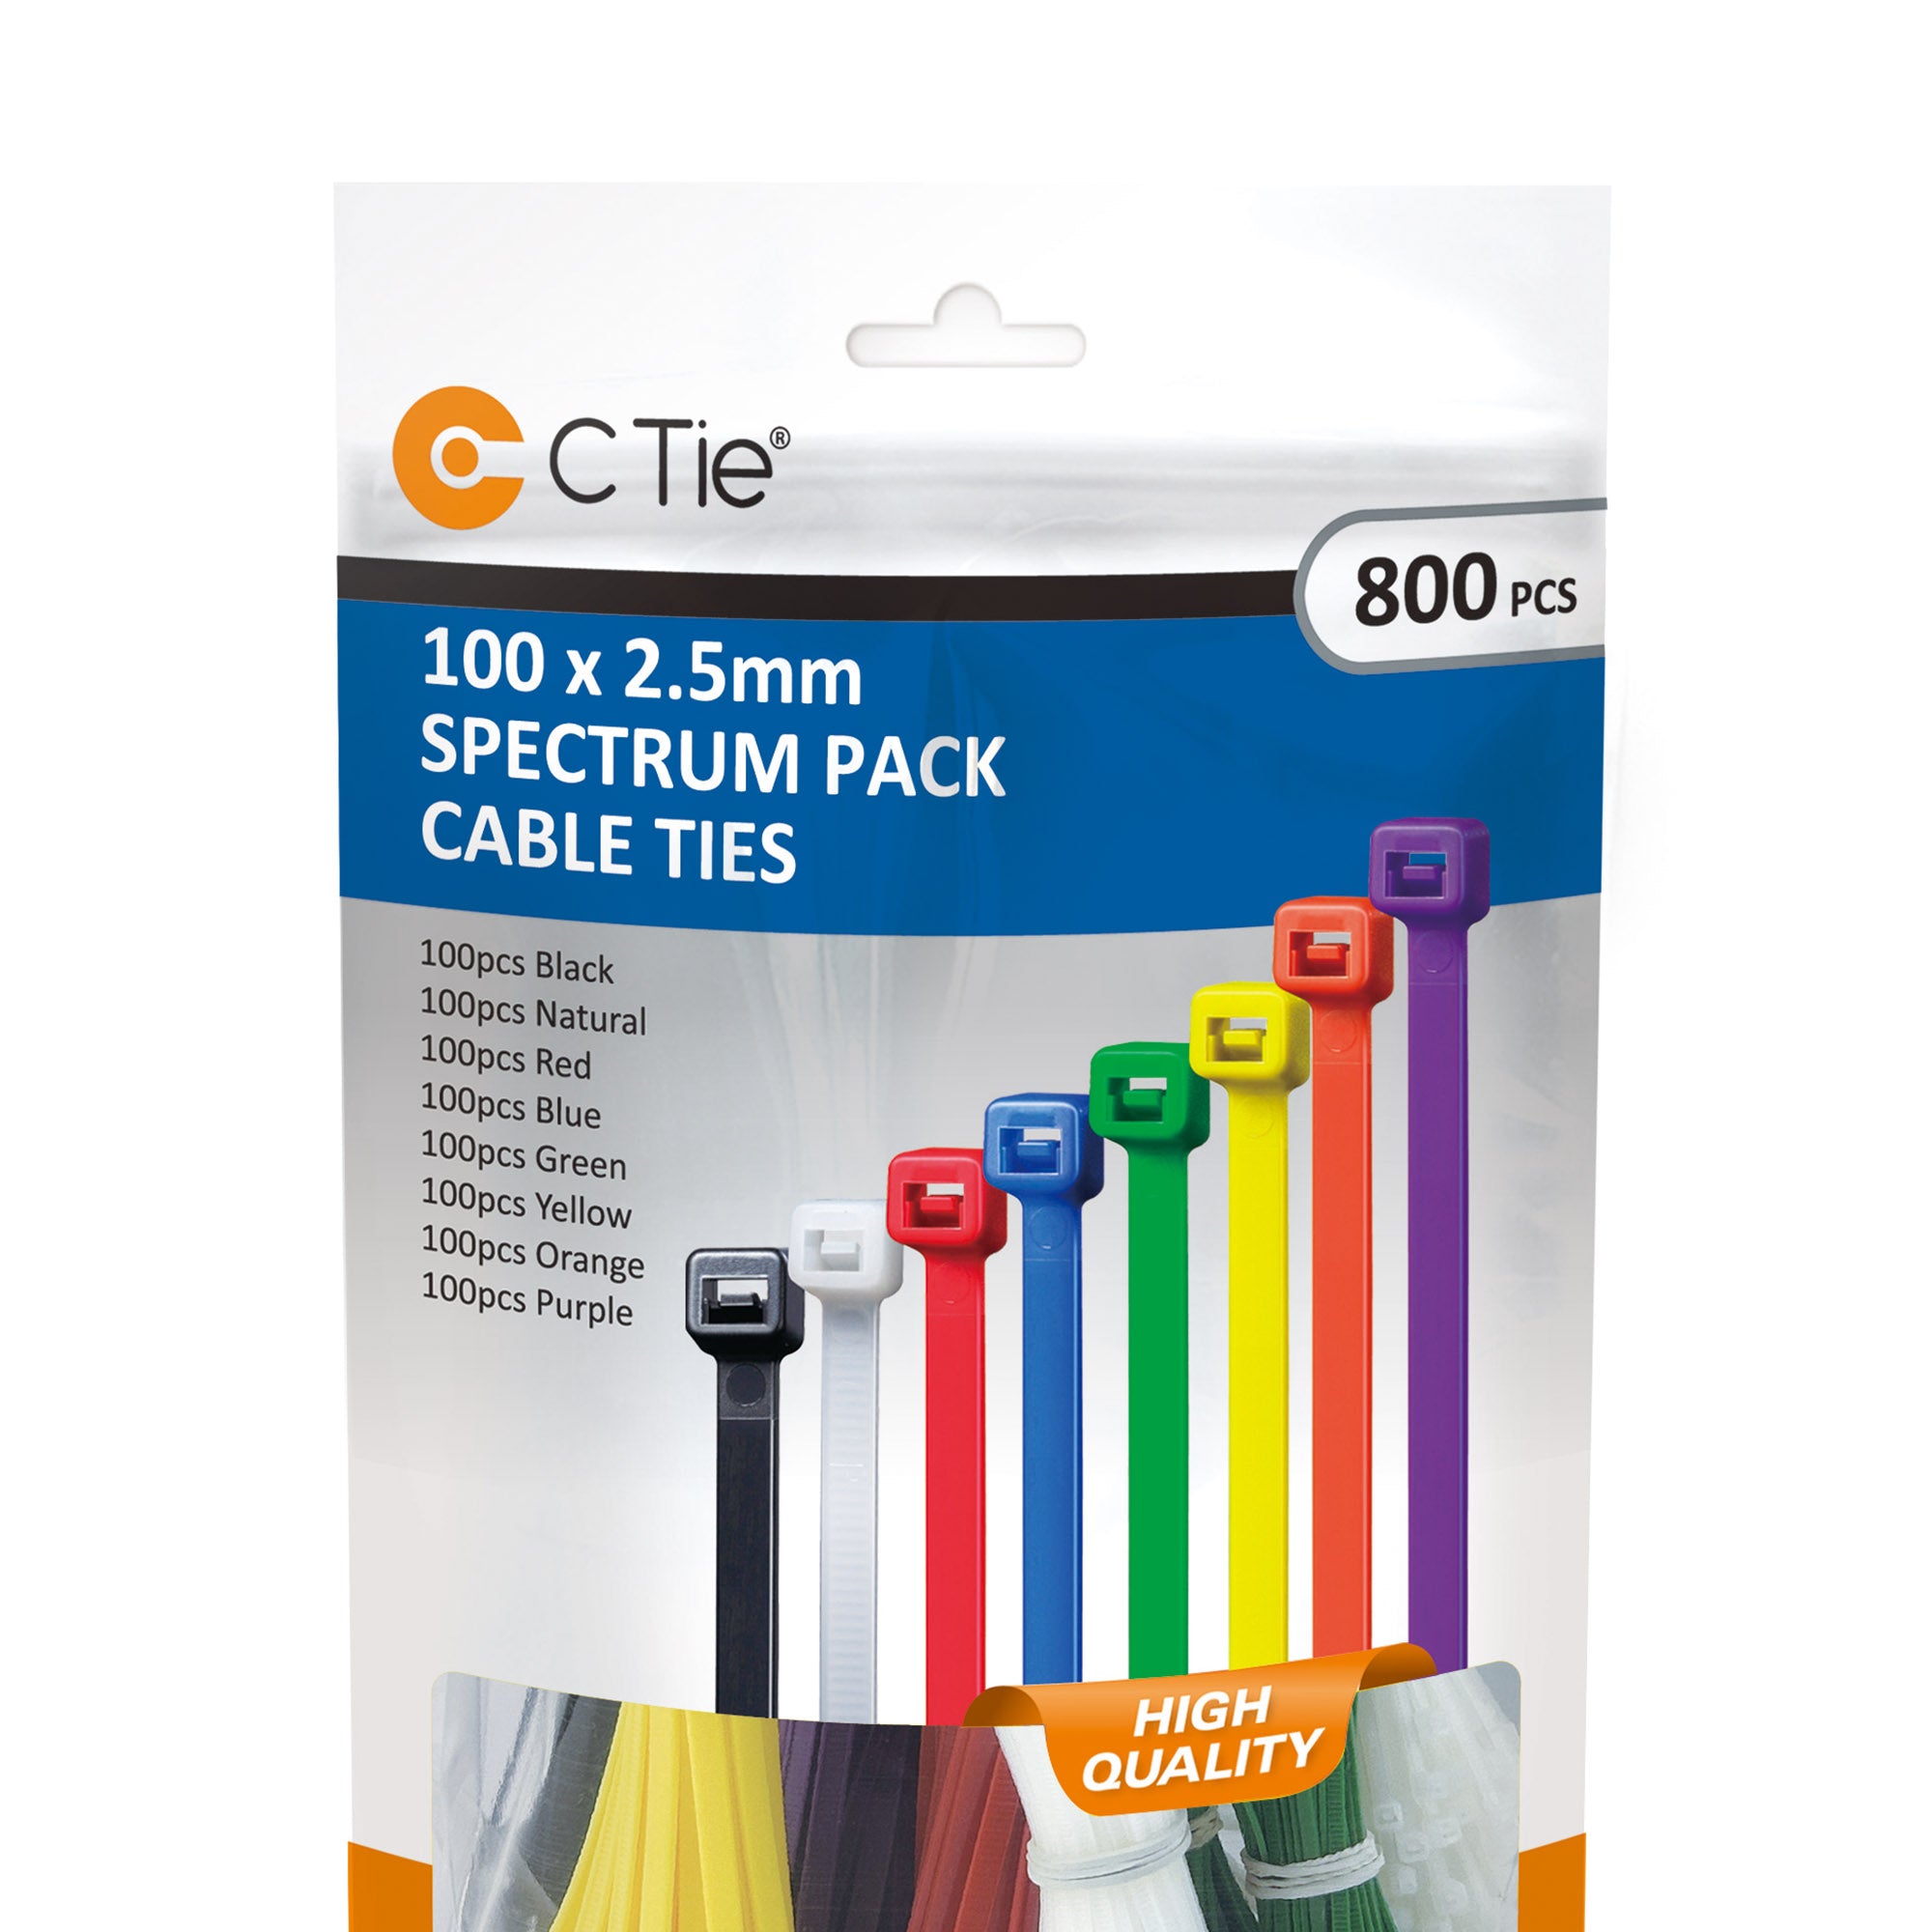 Assorted Cable Ties - 800pcs - 100 x 2.5mm - Multi Colour Spectrum Pack